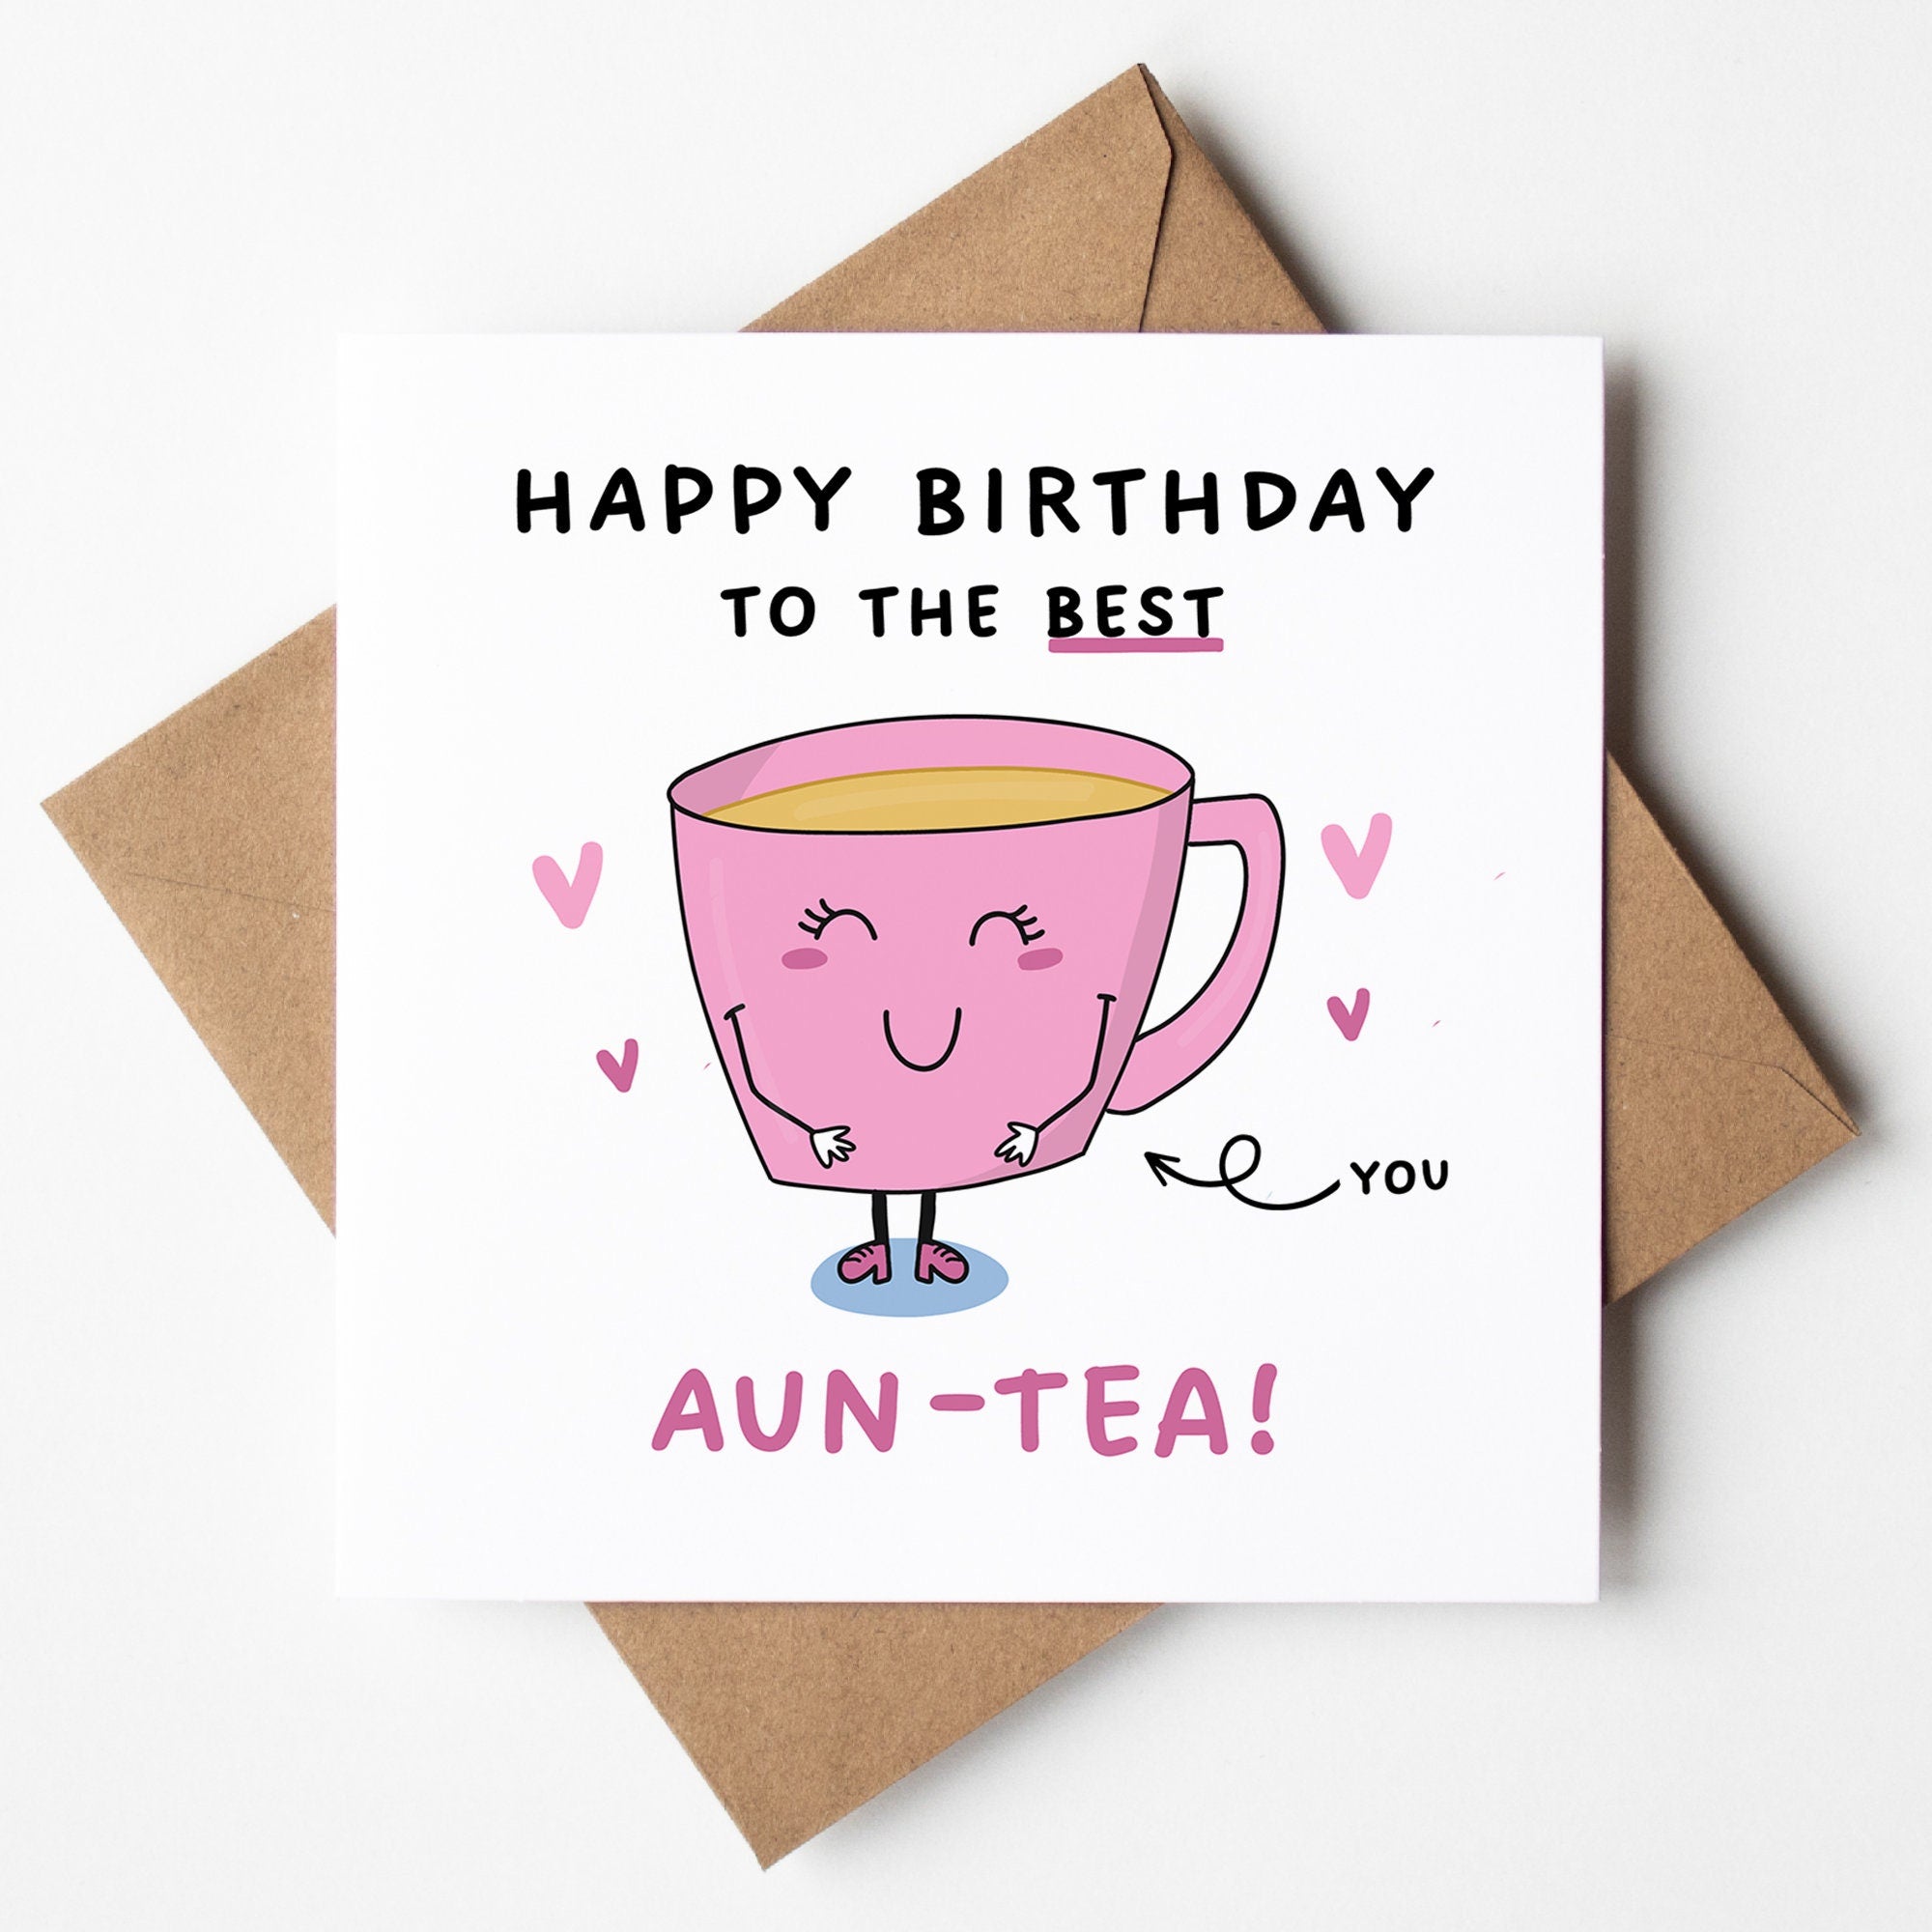 Happy Birthday Aunty, Best Aunty, Aun-tea, Tea Pun Card, For Aunty, For Auntie, For Aunt, Best Aunty, Best Auntie, Food Pun, Funny Birthday